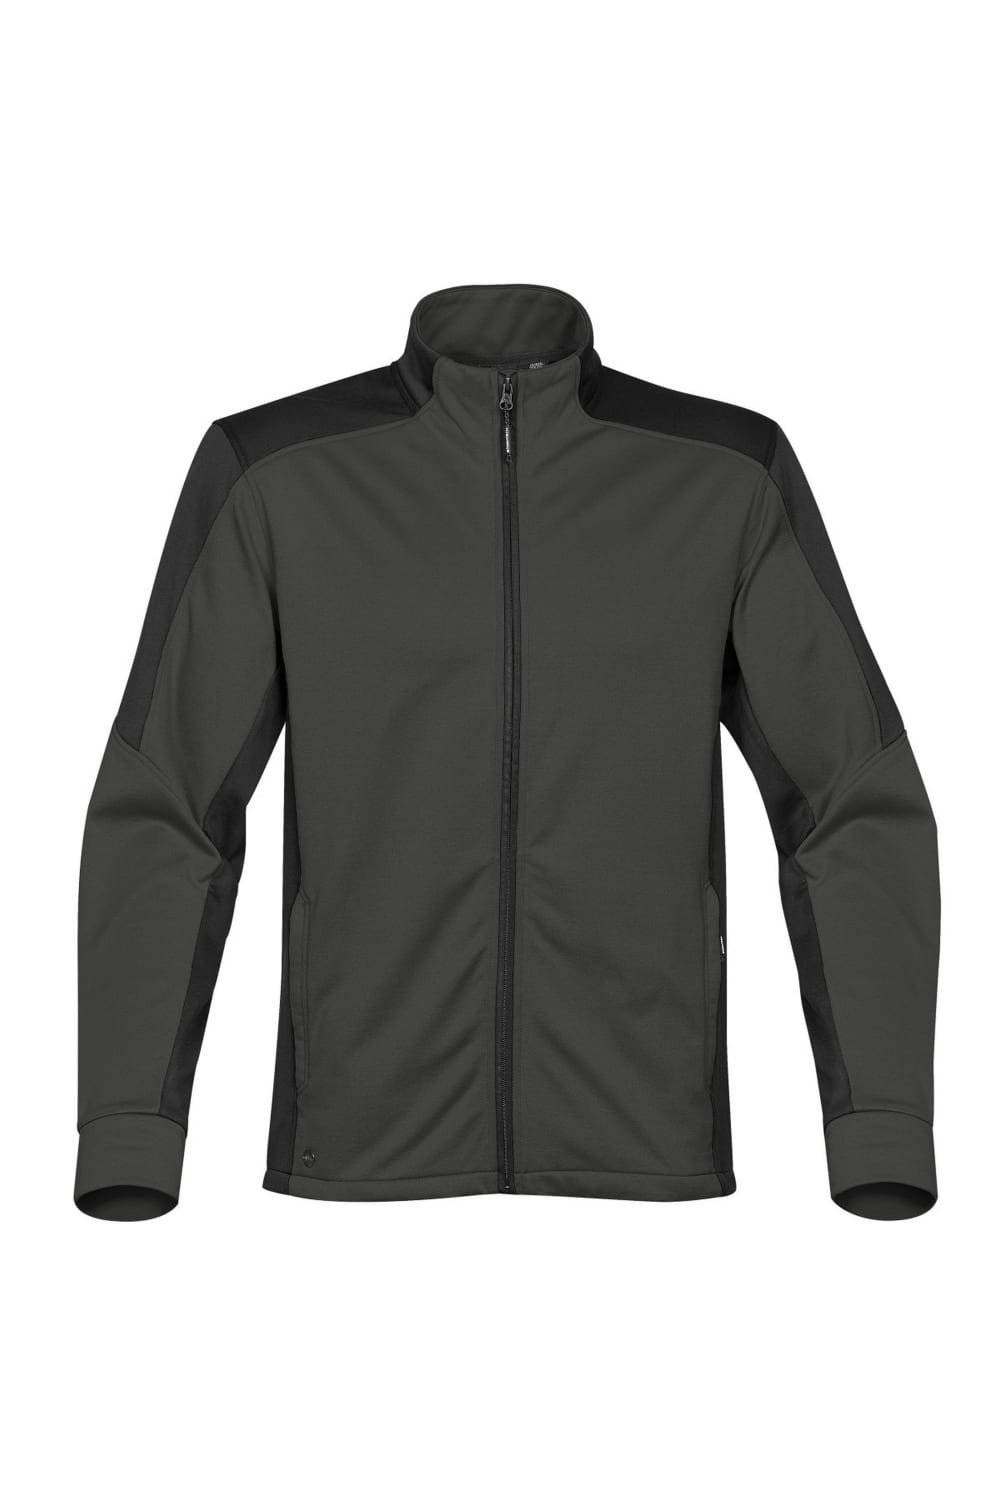 Stormtech Mens Chakra Fleece Jacket (Carbon/Black)